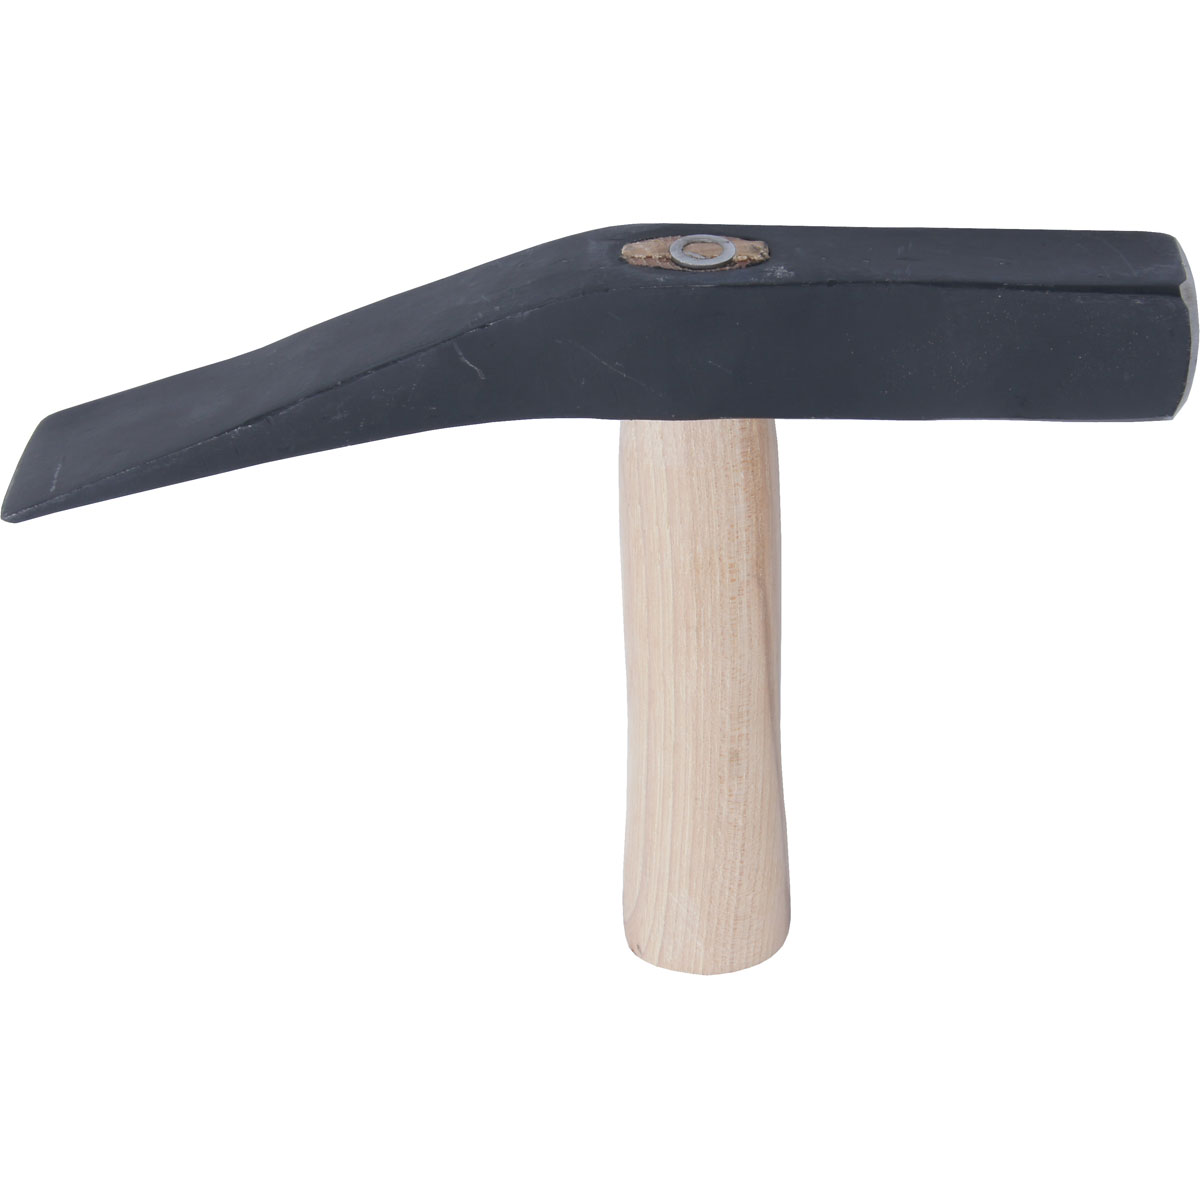 Ideal WEG2053901 Pflasterhammer 1500g rheinische Form